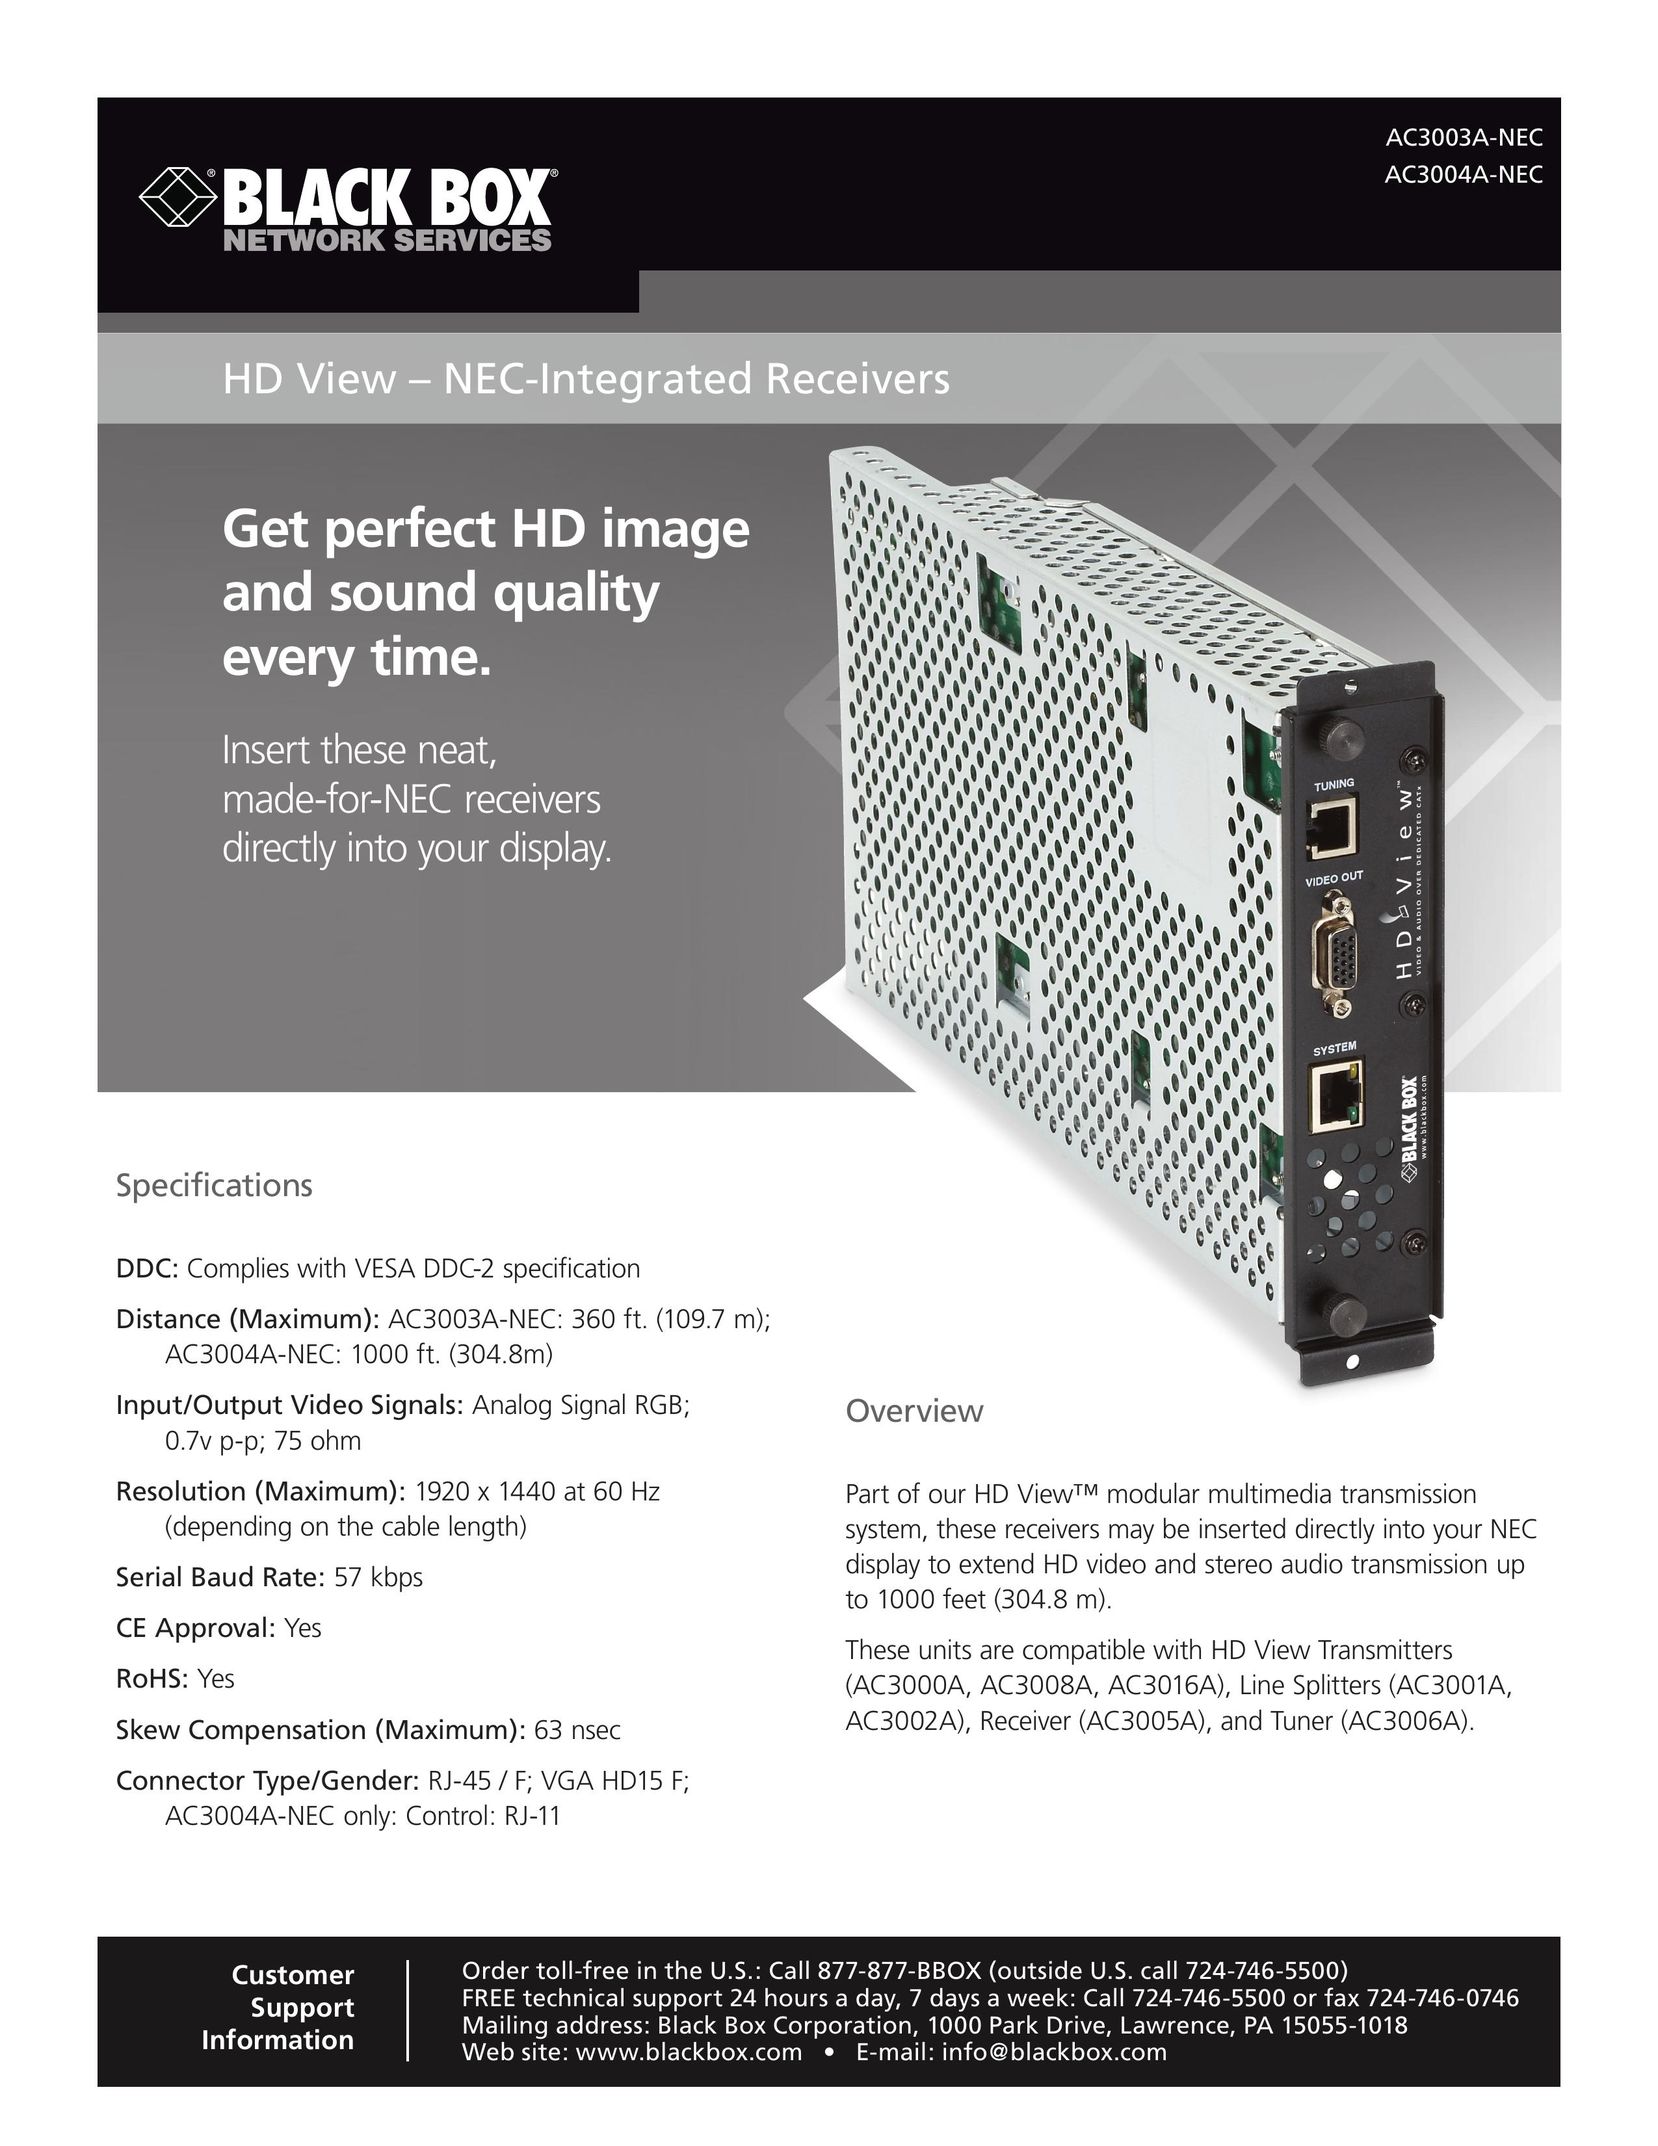 Black Box AC3003A-NEC TV Receiver User Manual